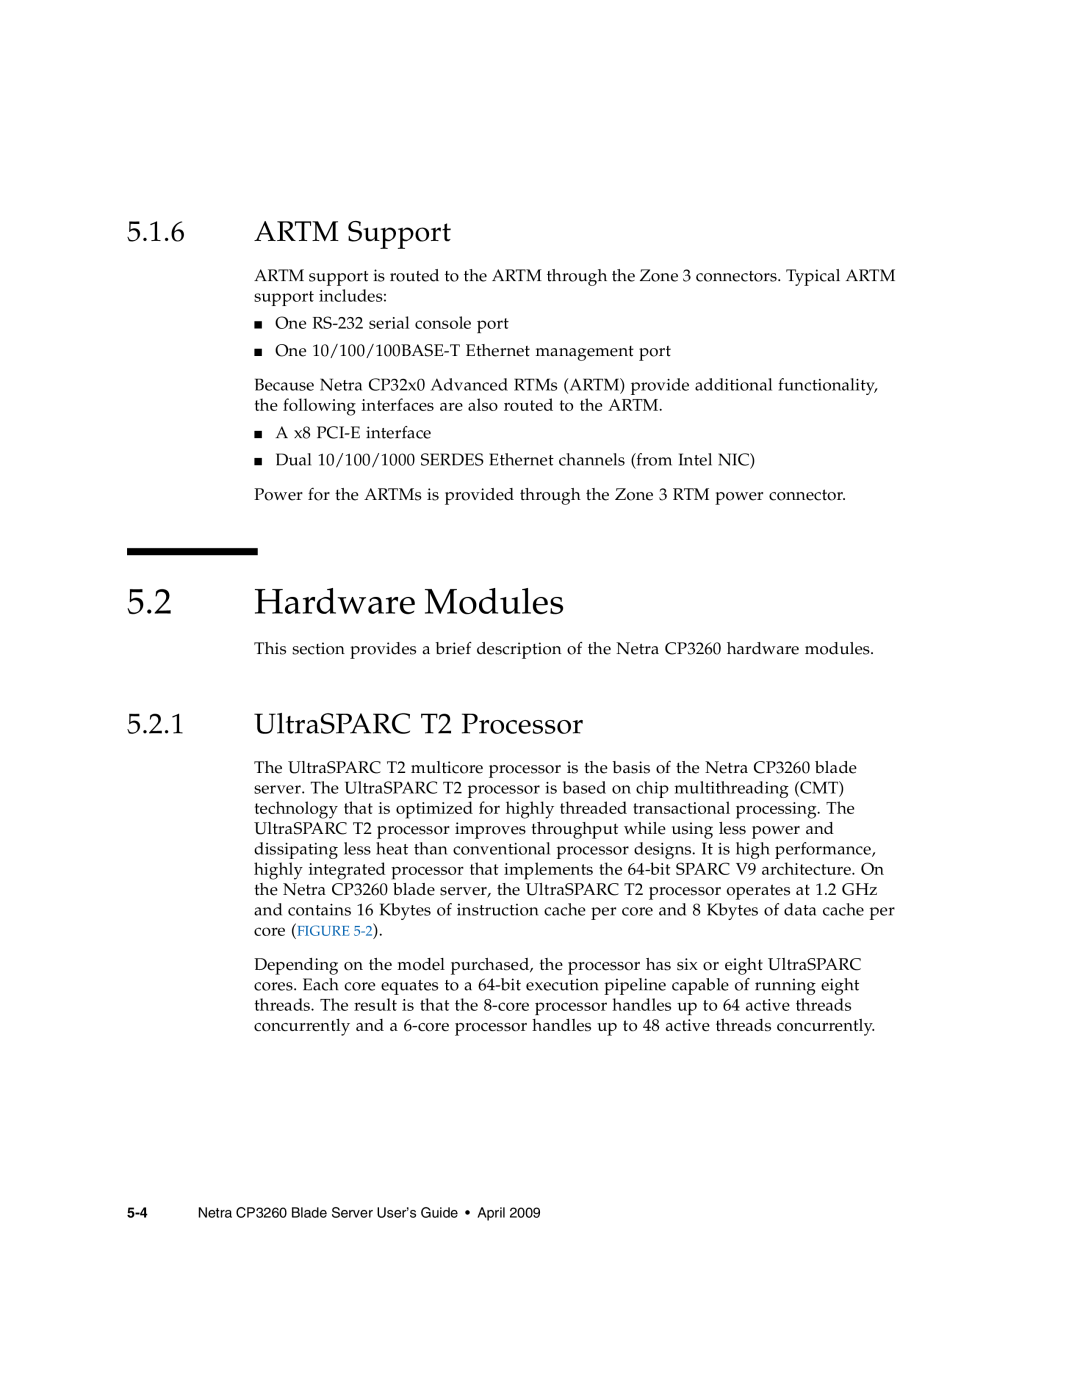 Sun Microsystems CP3260 manual Hardware Modules, ARTM Support, UltraSPARC T2 Processor 